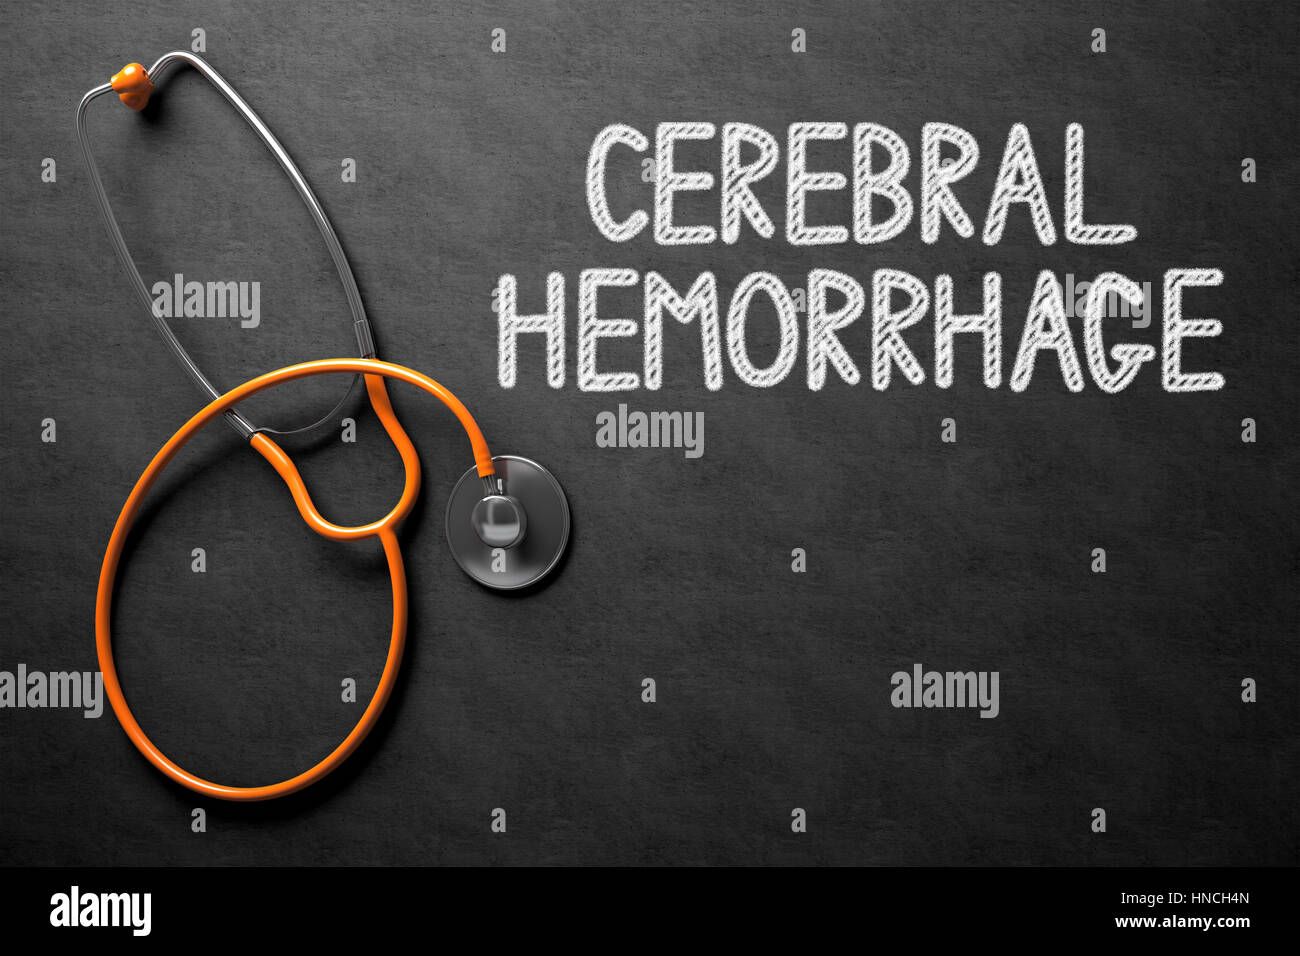 Cerebral Hemorrhage Concept on Chalkboard. 3D Illustration. Stock Photo